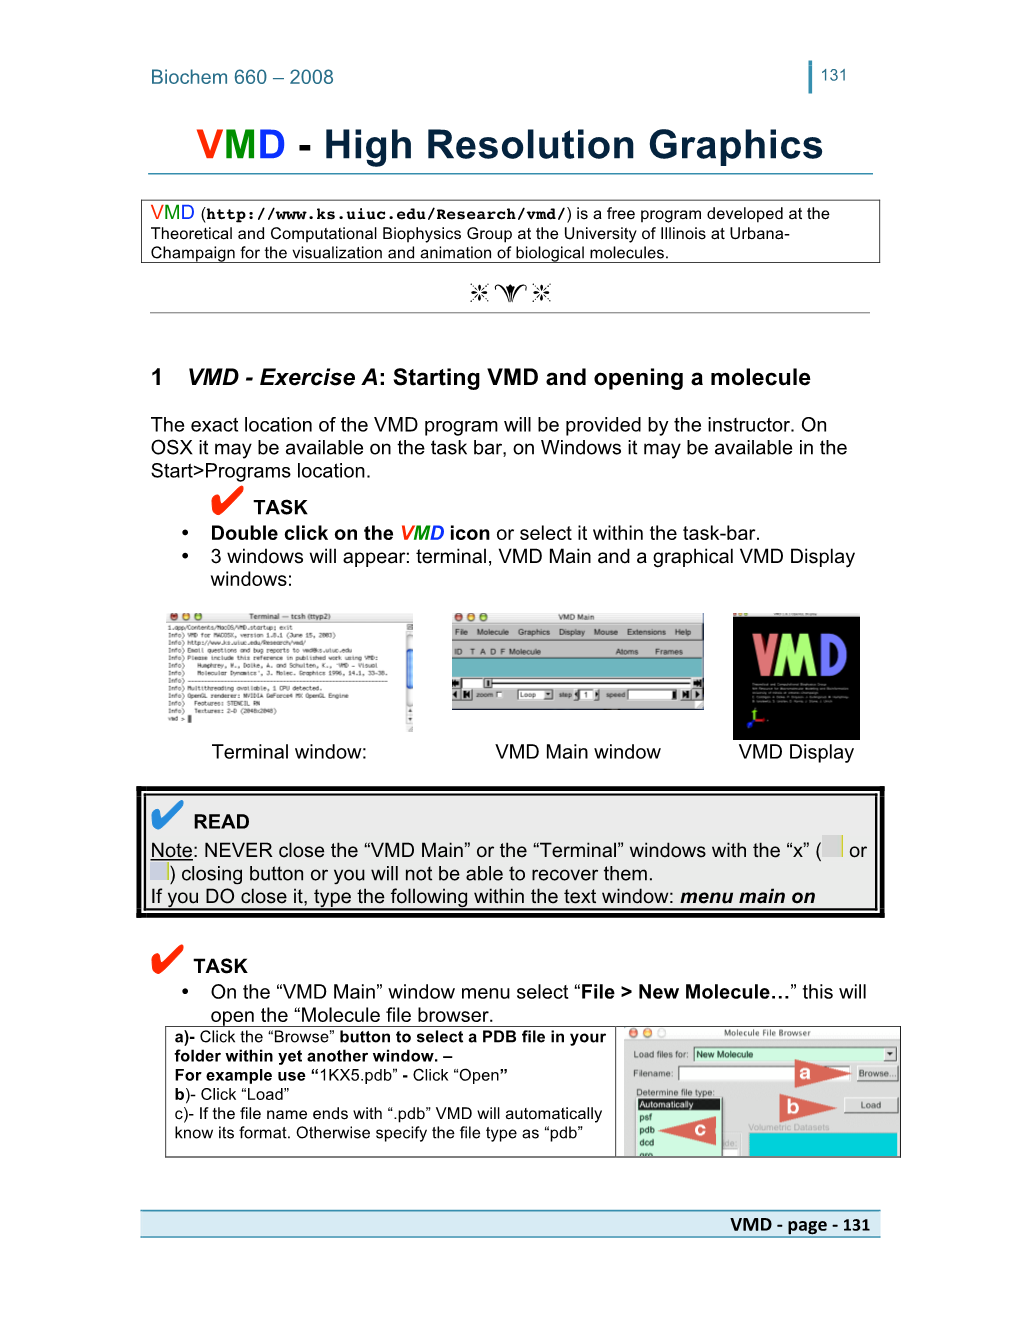 VMD - High Resolution Graphics